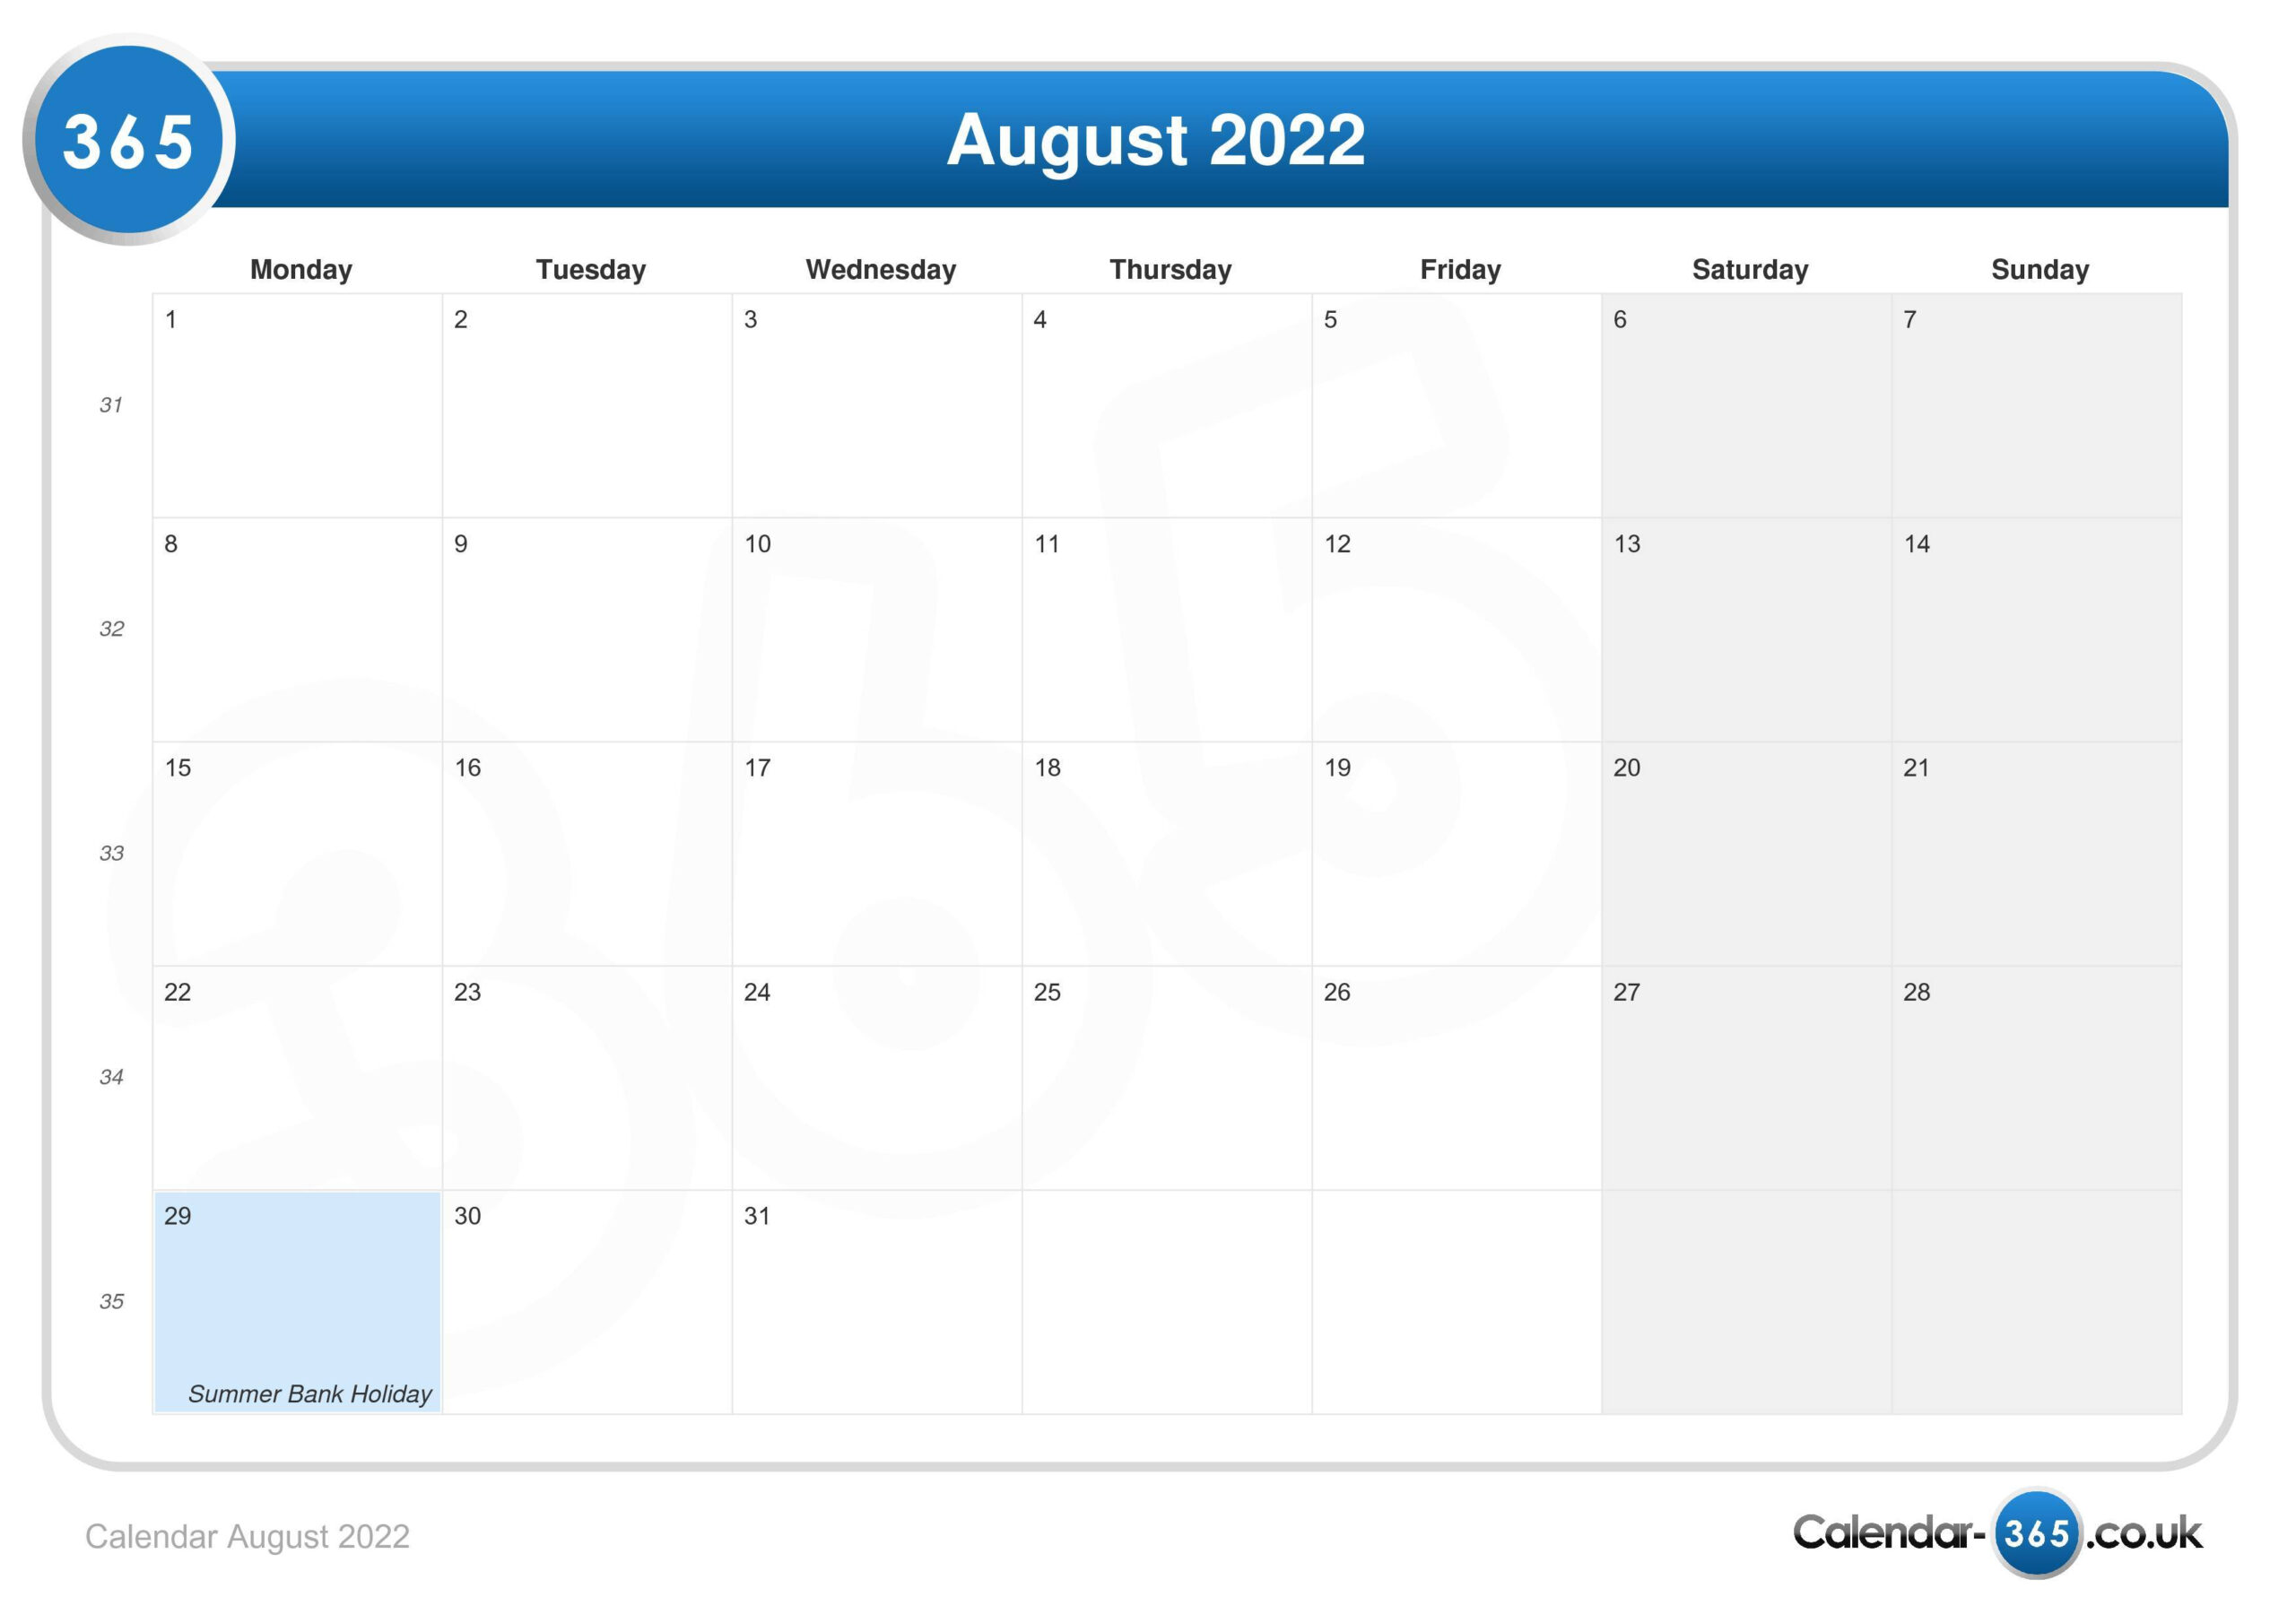 Catch August 2022 Holiday Calendar